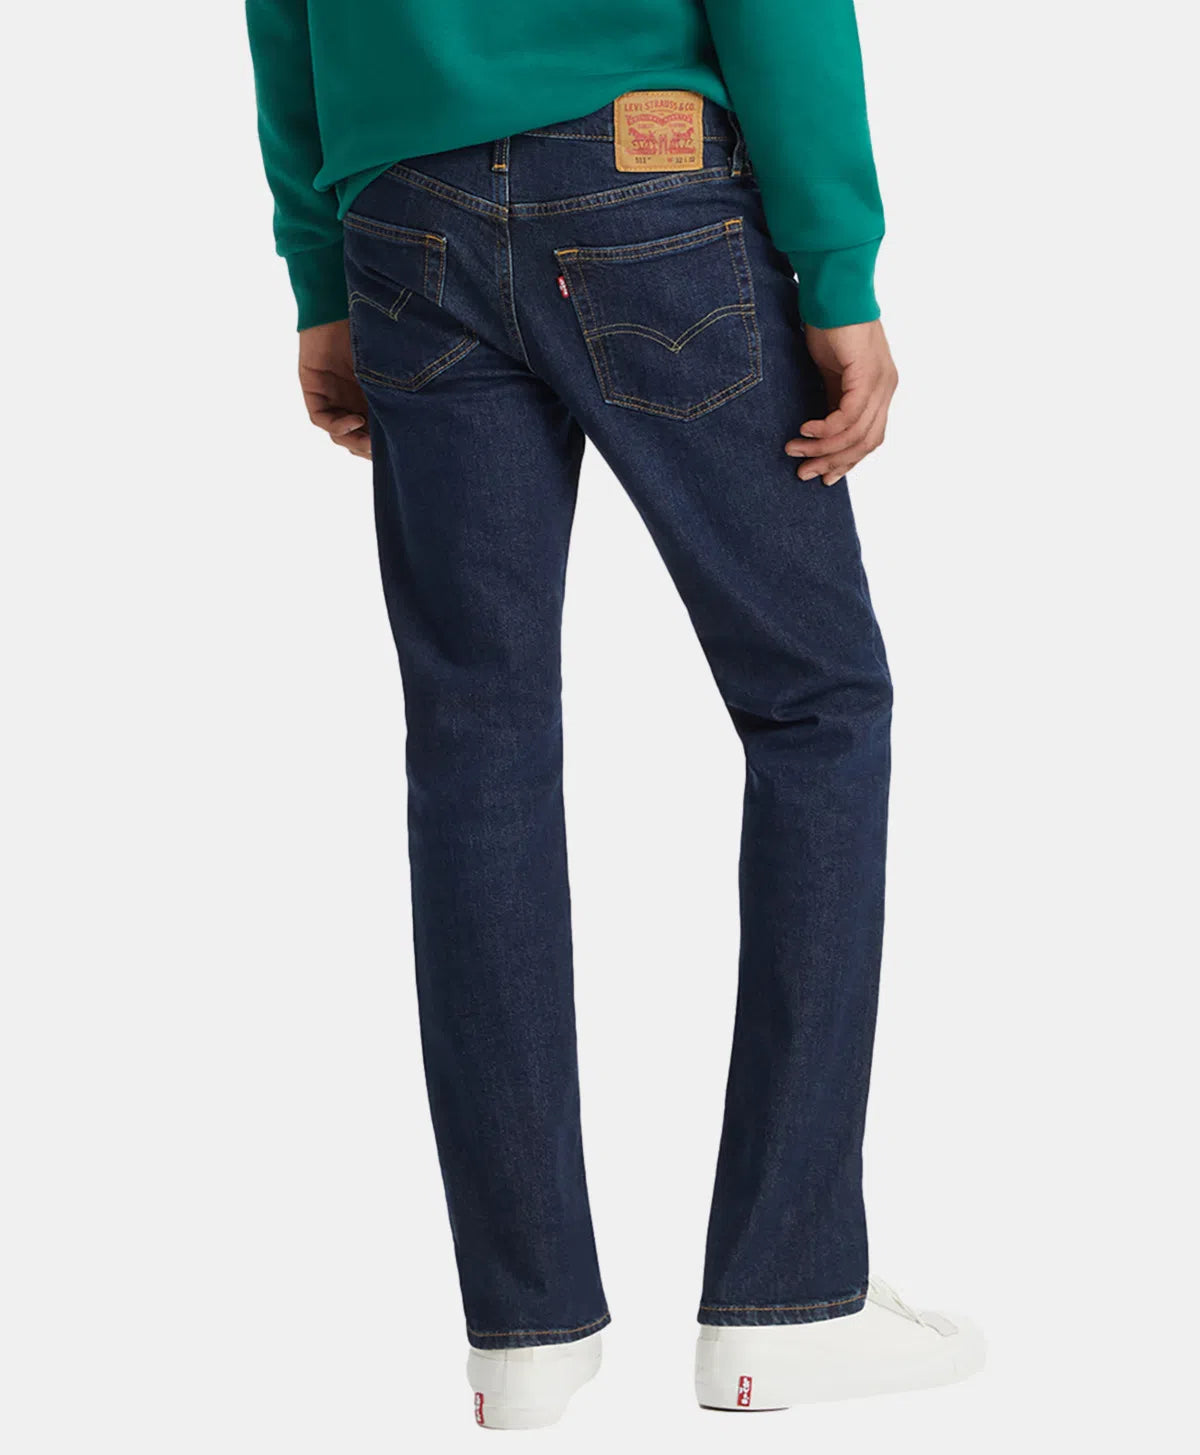 Jeans Hombre Levi´s 511 Slim Azul Oscuro